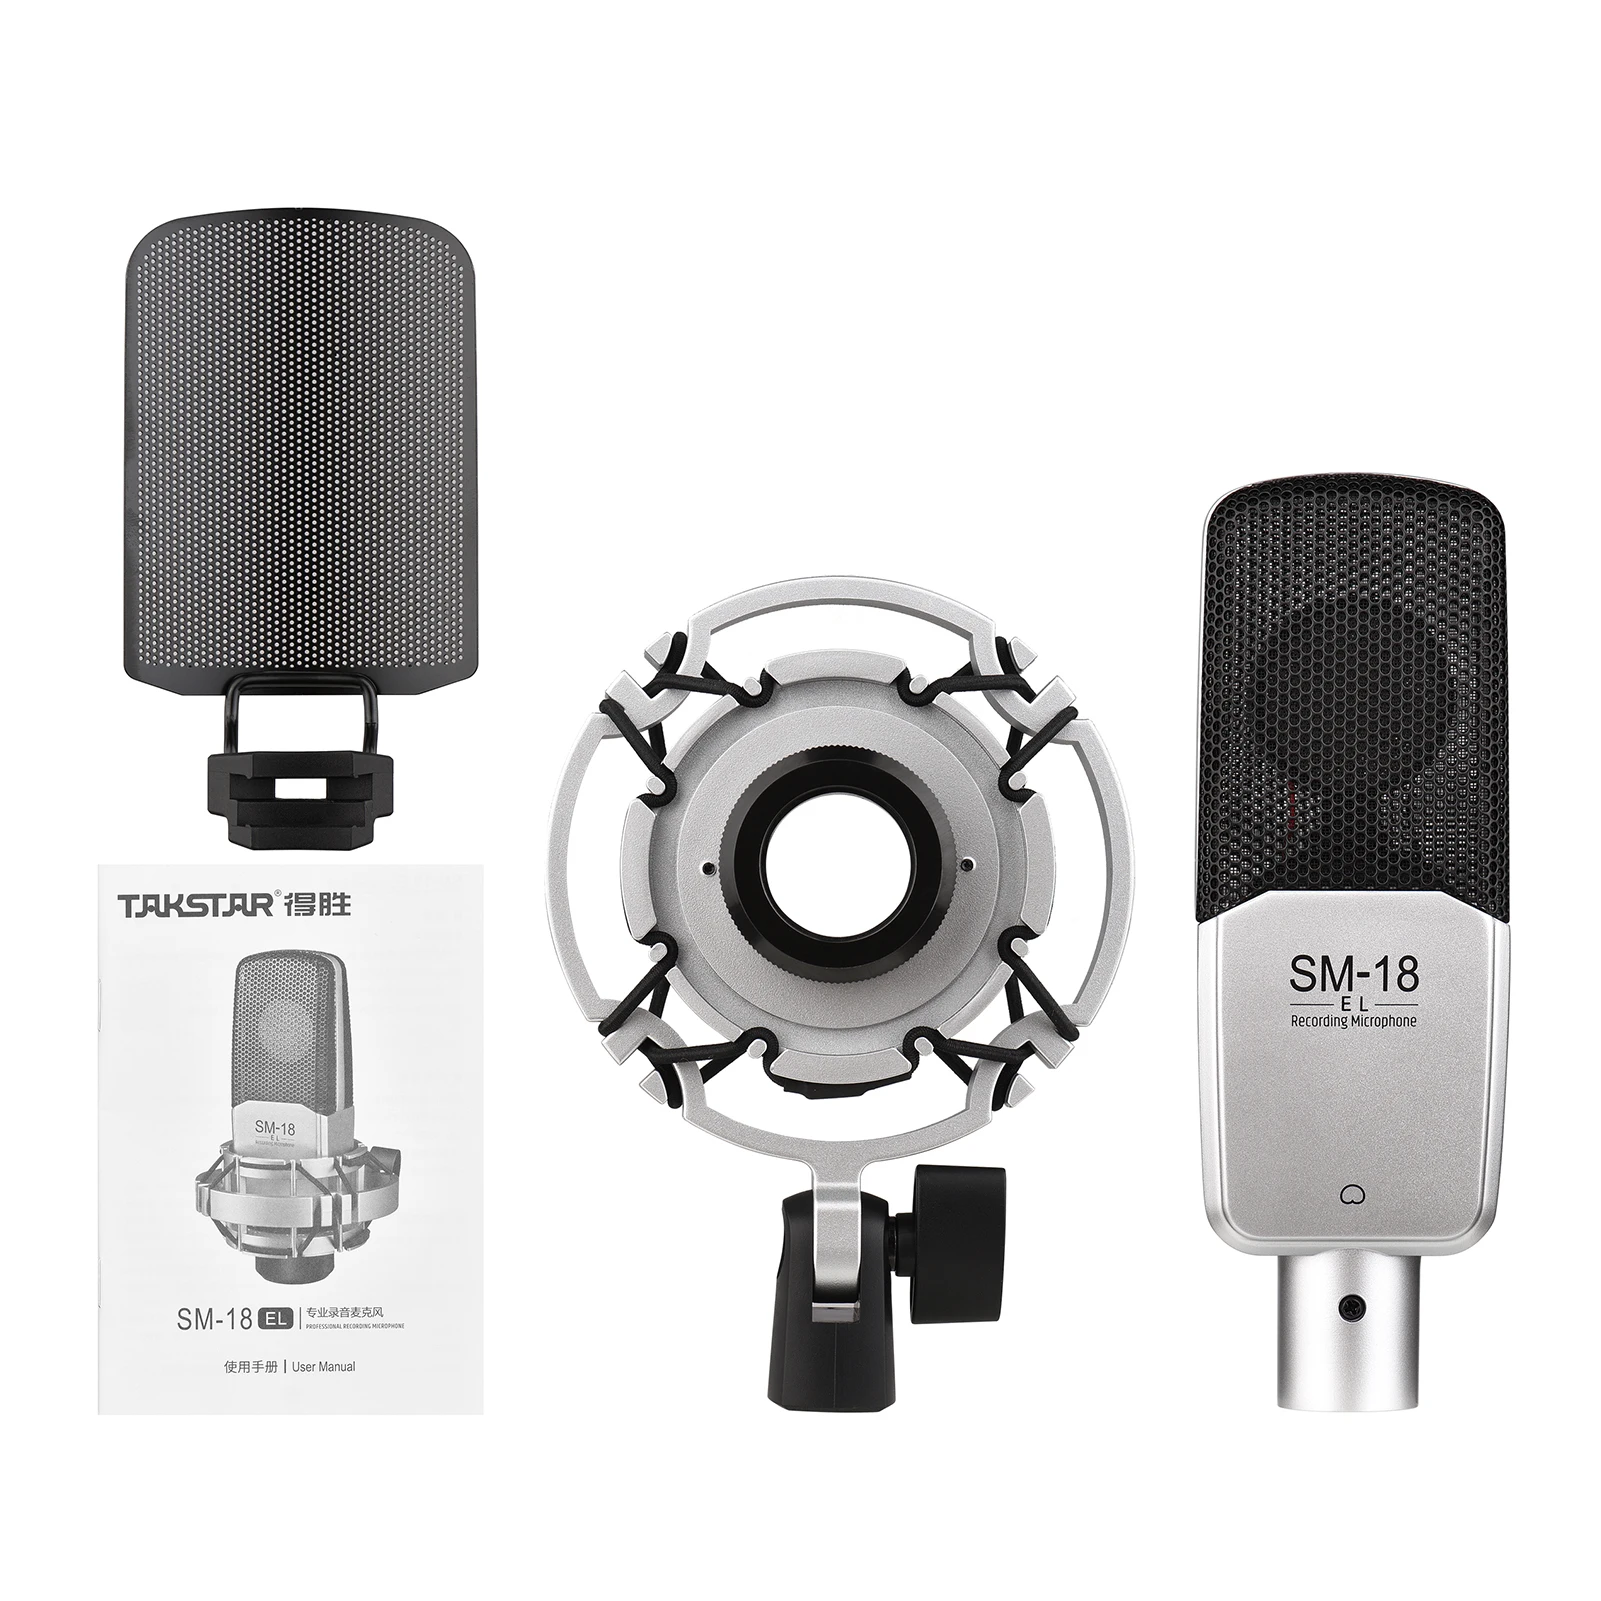 TAKSTAR SM-18 EL Professional Recording Microphone Cardioid Condenser XLR Mic Kit with Adjustable Shock Mount Metal Pop Screen